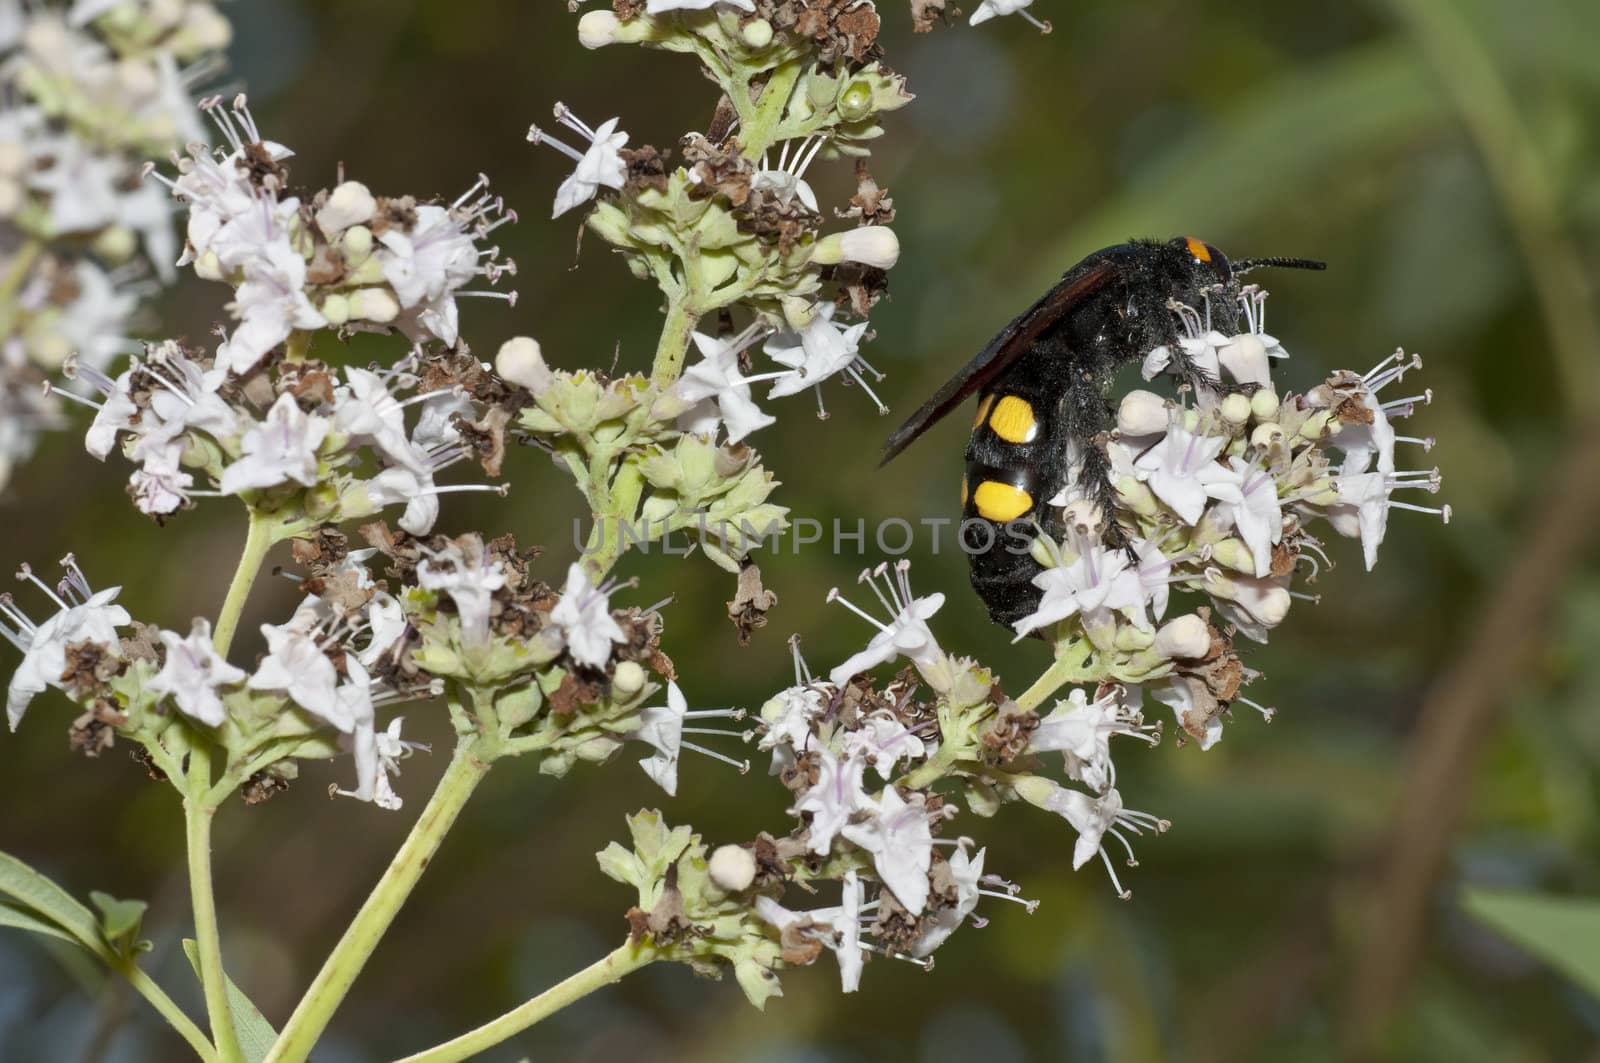 Potter wasp hunting for pollen on white flowers, Eumenidae